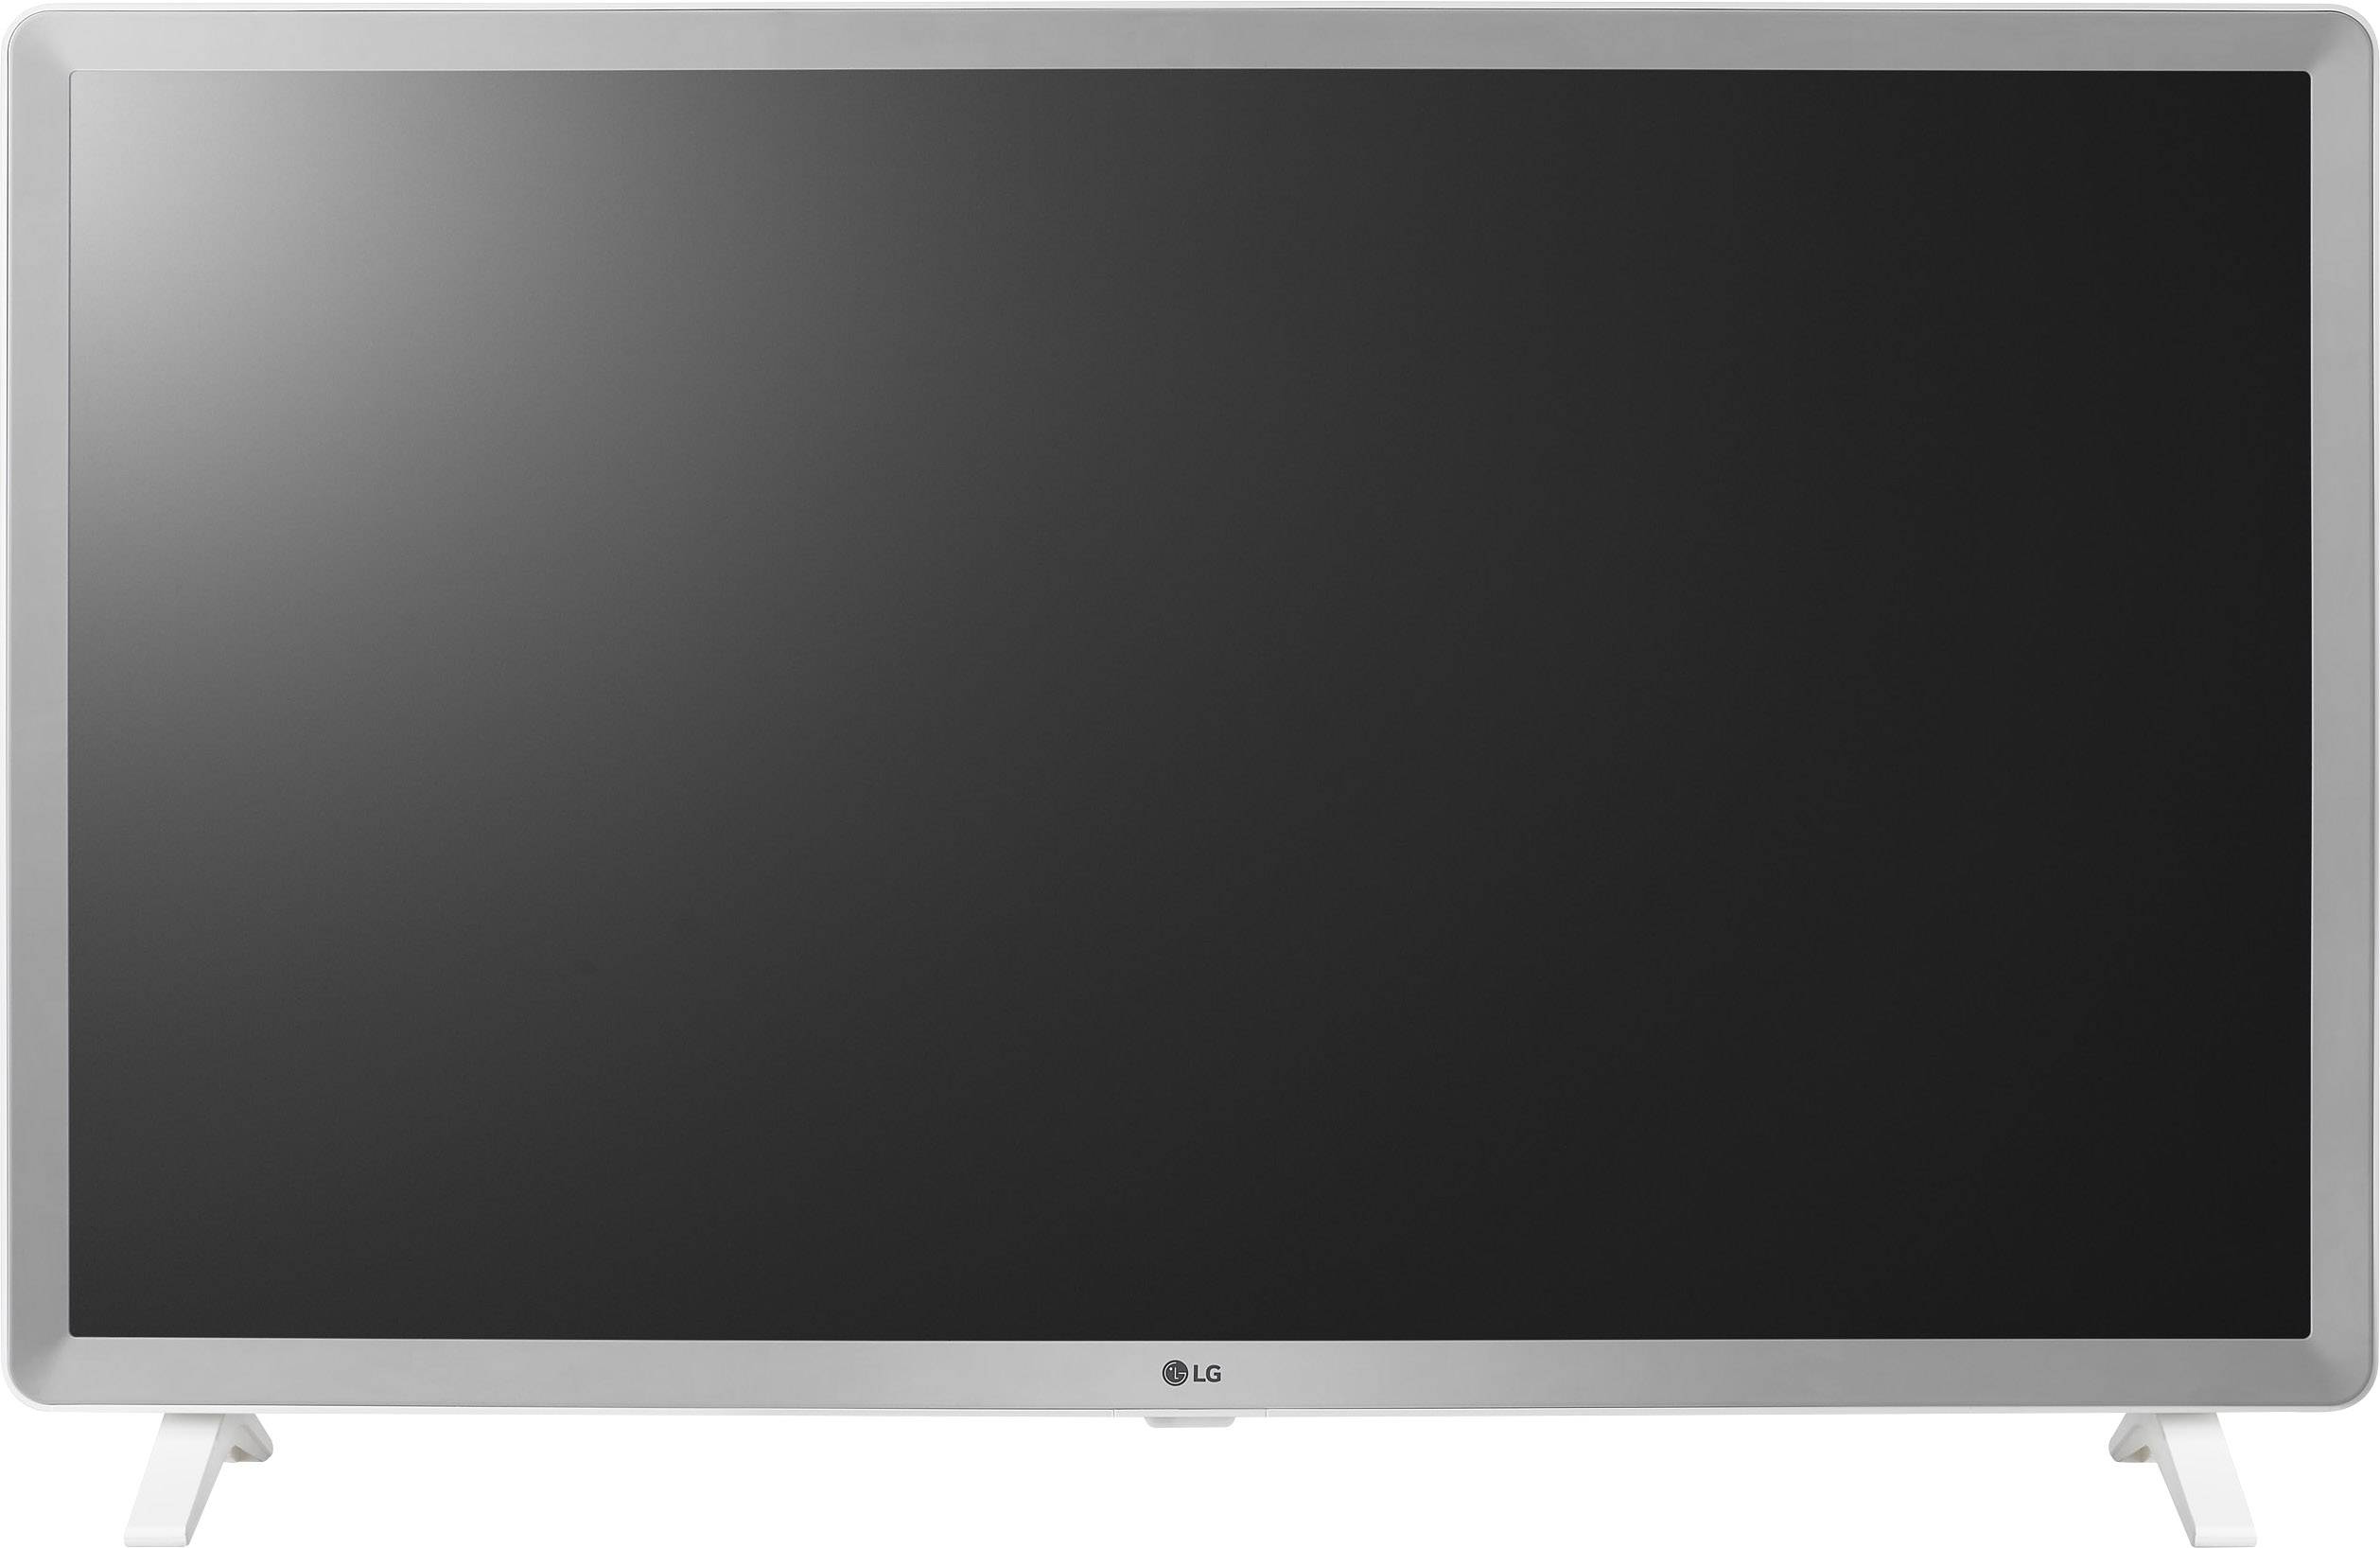 Lg 43 диагональ. Телевизор LG 32lk6190. 32" Телевизор LG 32lm6380plc. Телевизор LG 32lk519b белый. Samtron 32sa701.